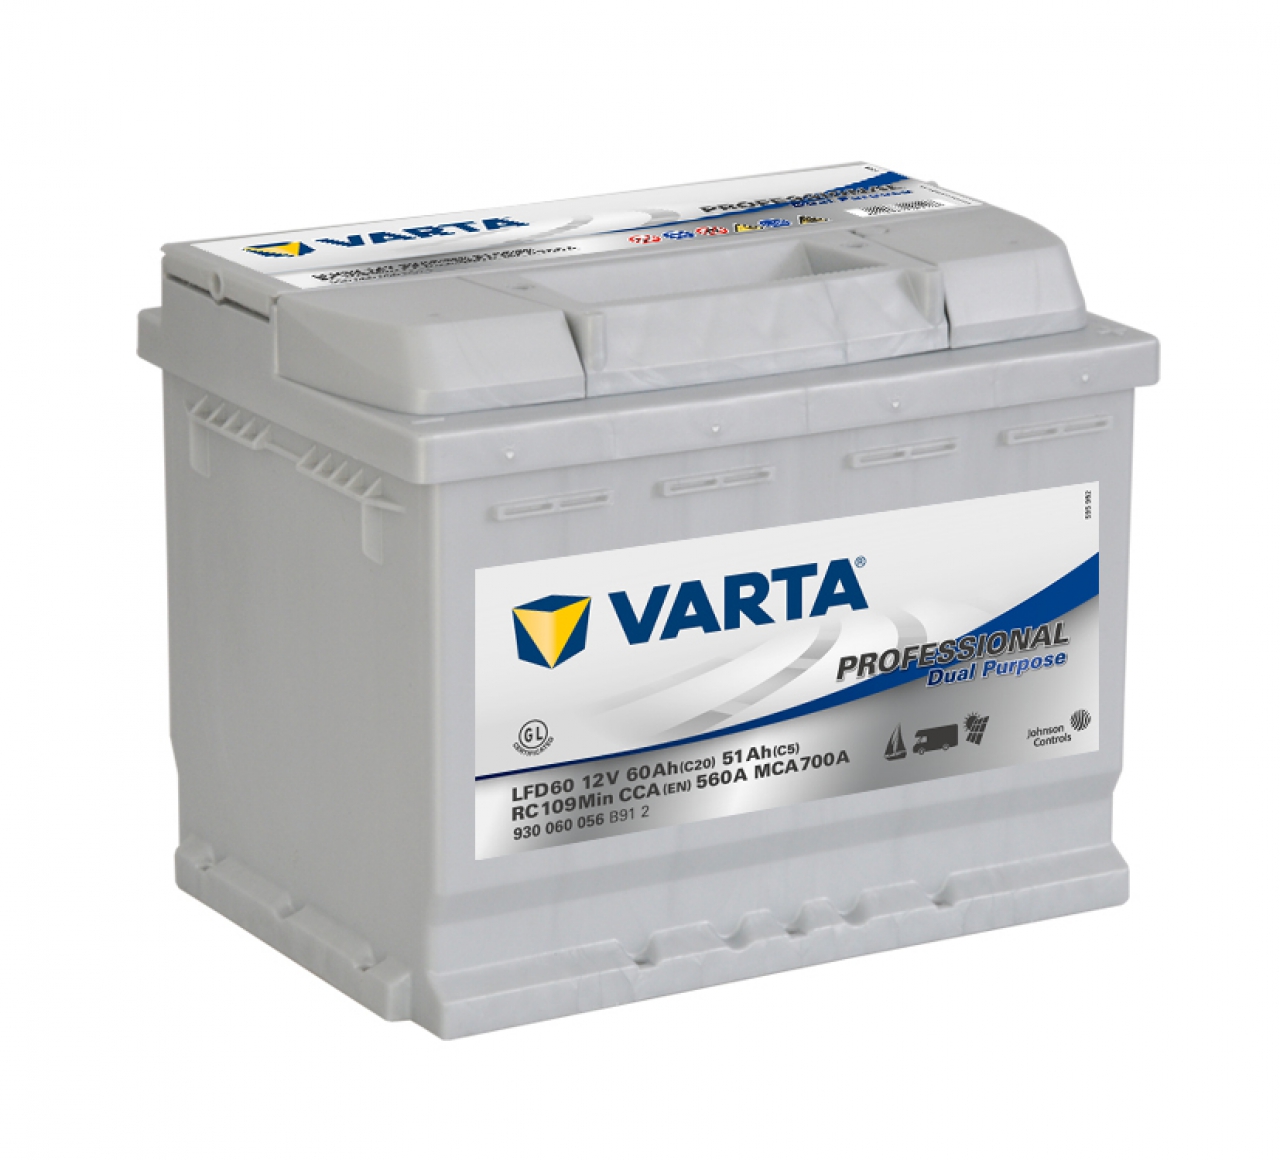 VARTA Professional Dual Purpose LFD60